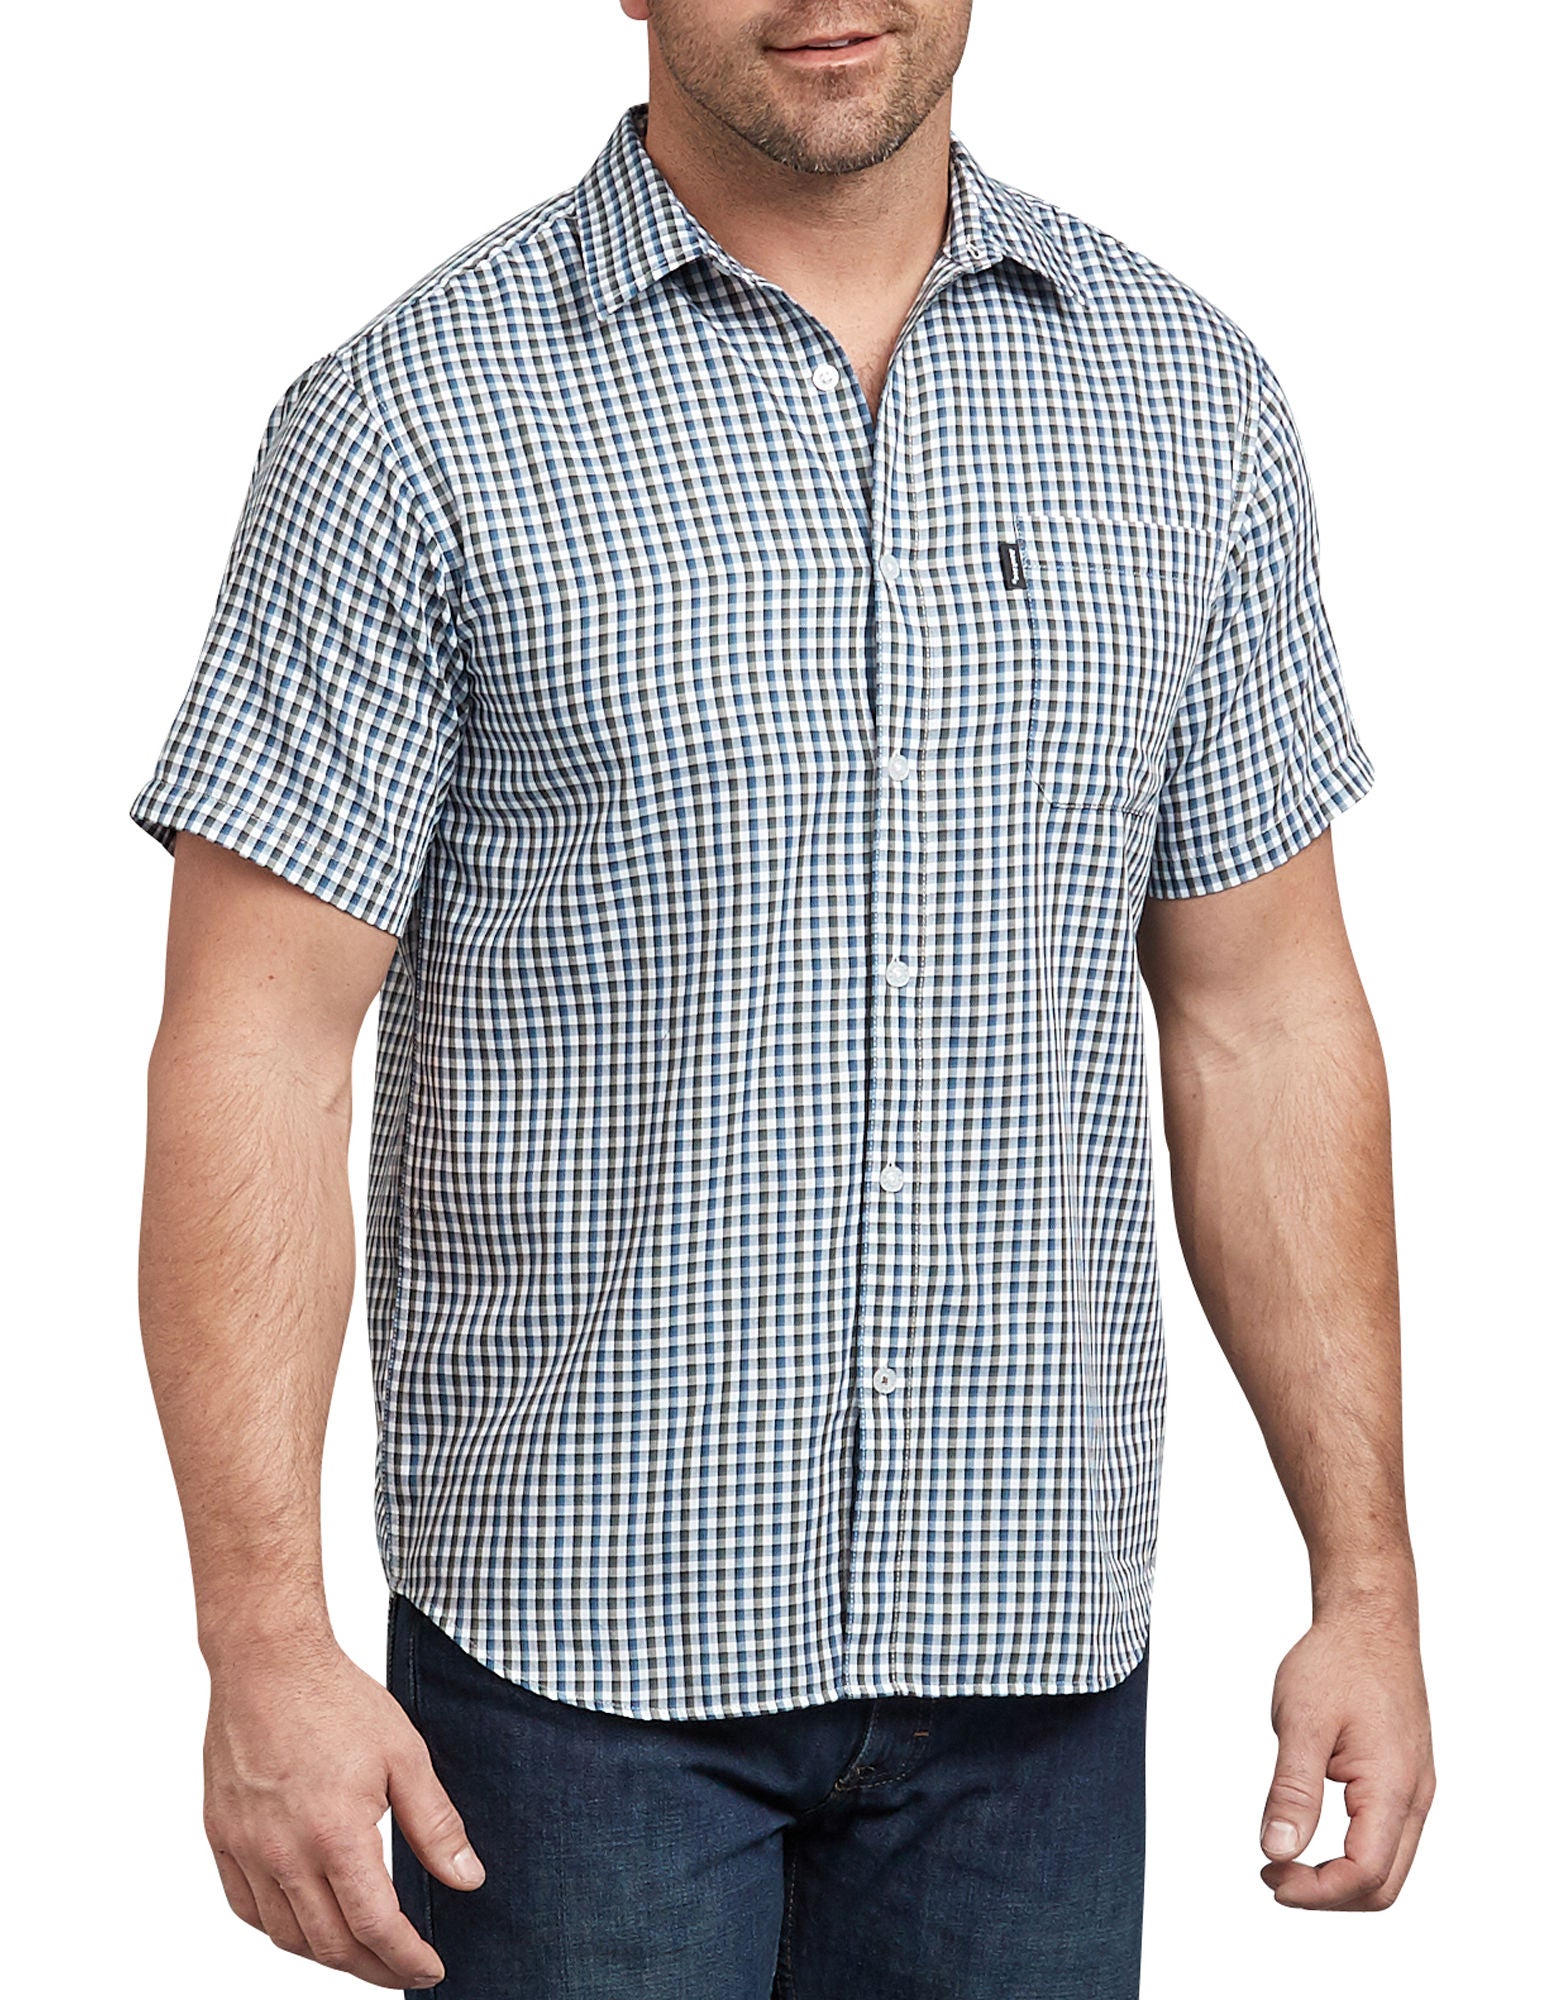 DIC-WS530 - Dickies Mens X-Series Modern Fit Yarn Dyed Shirt